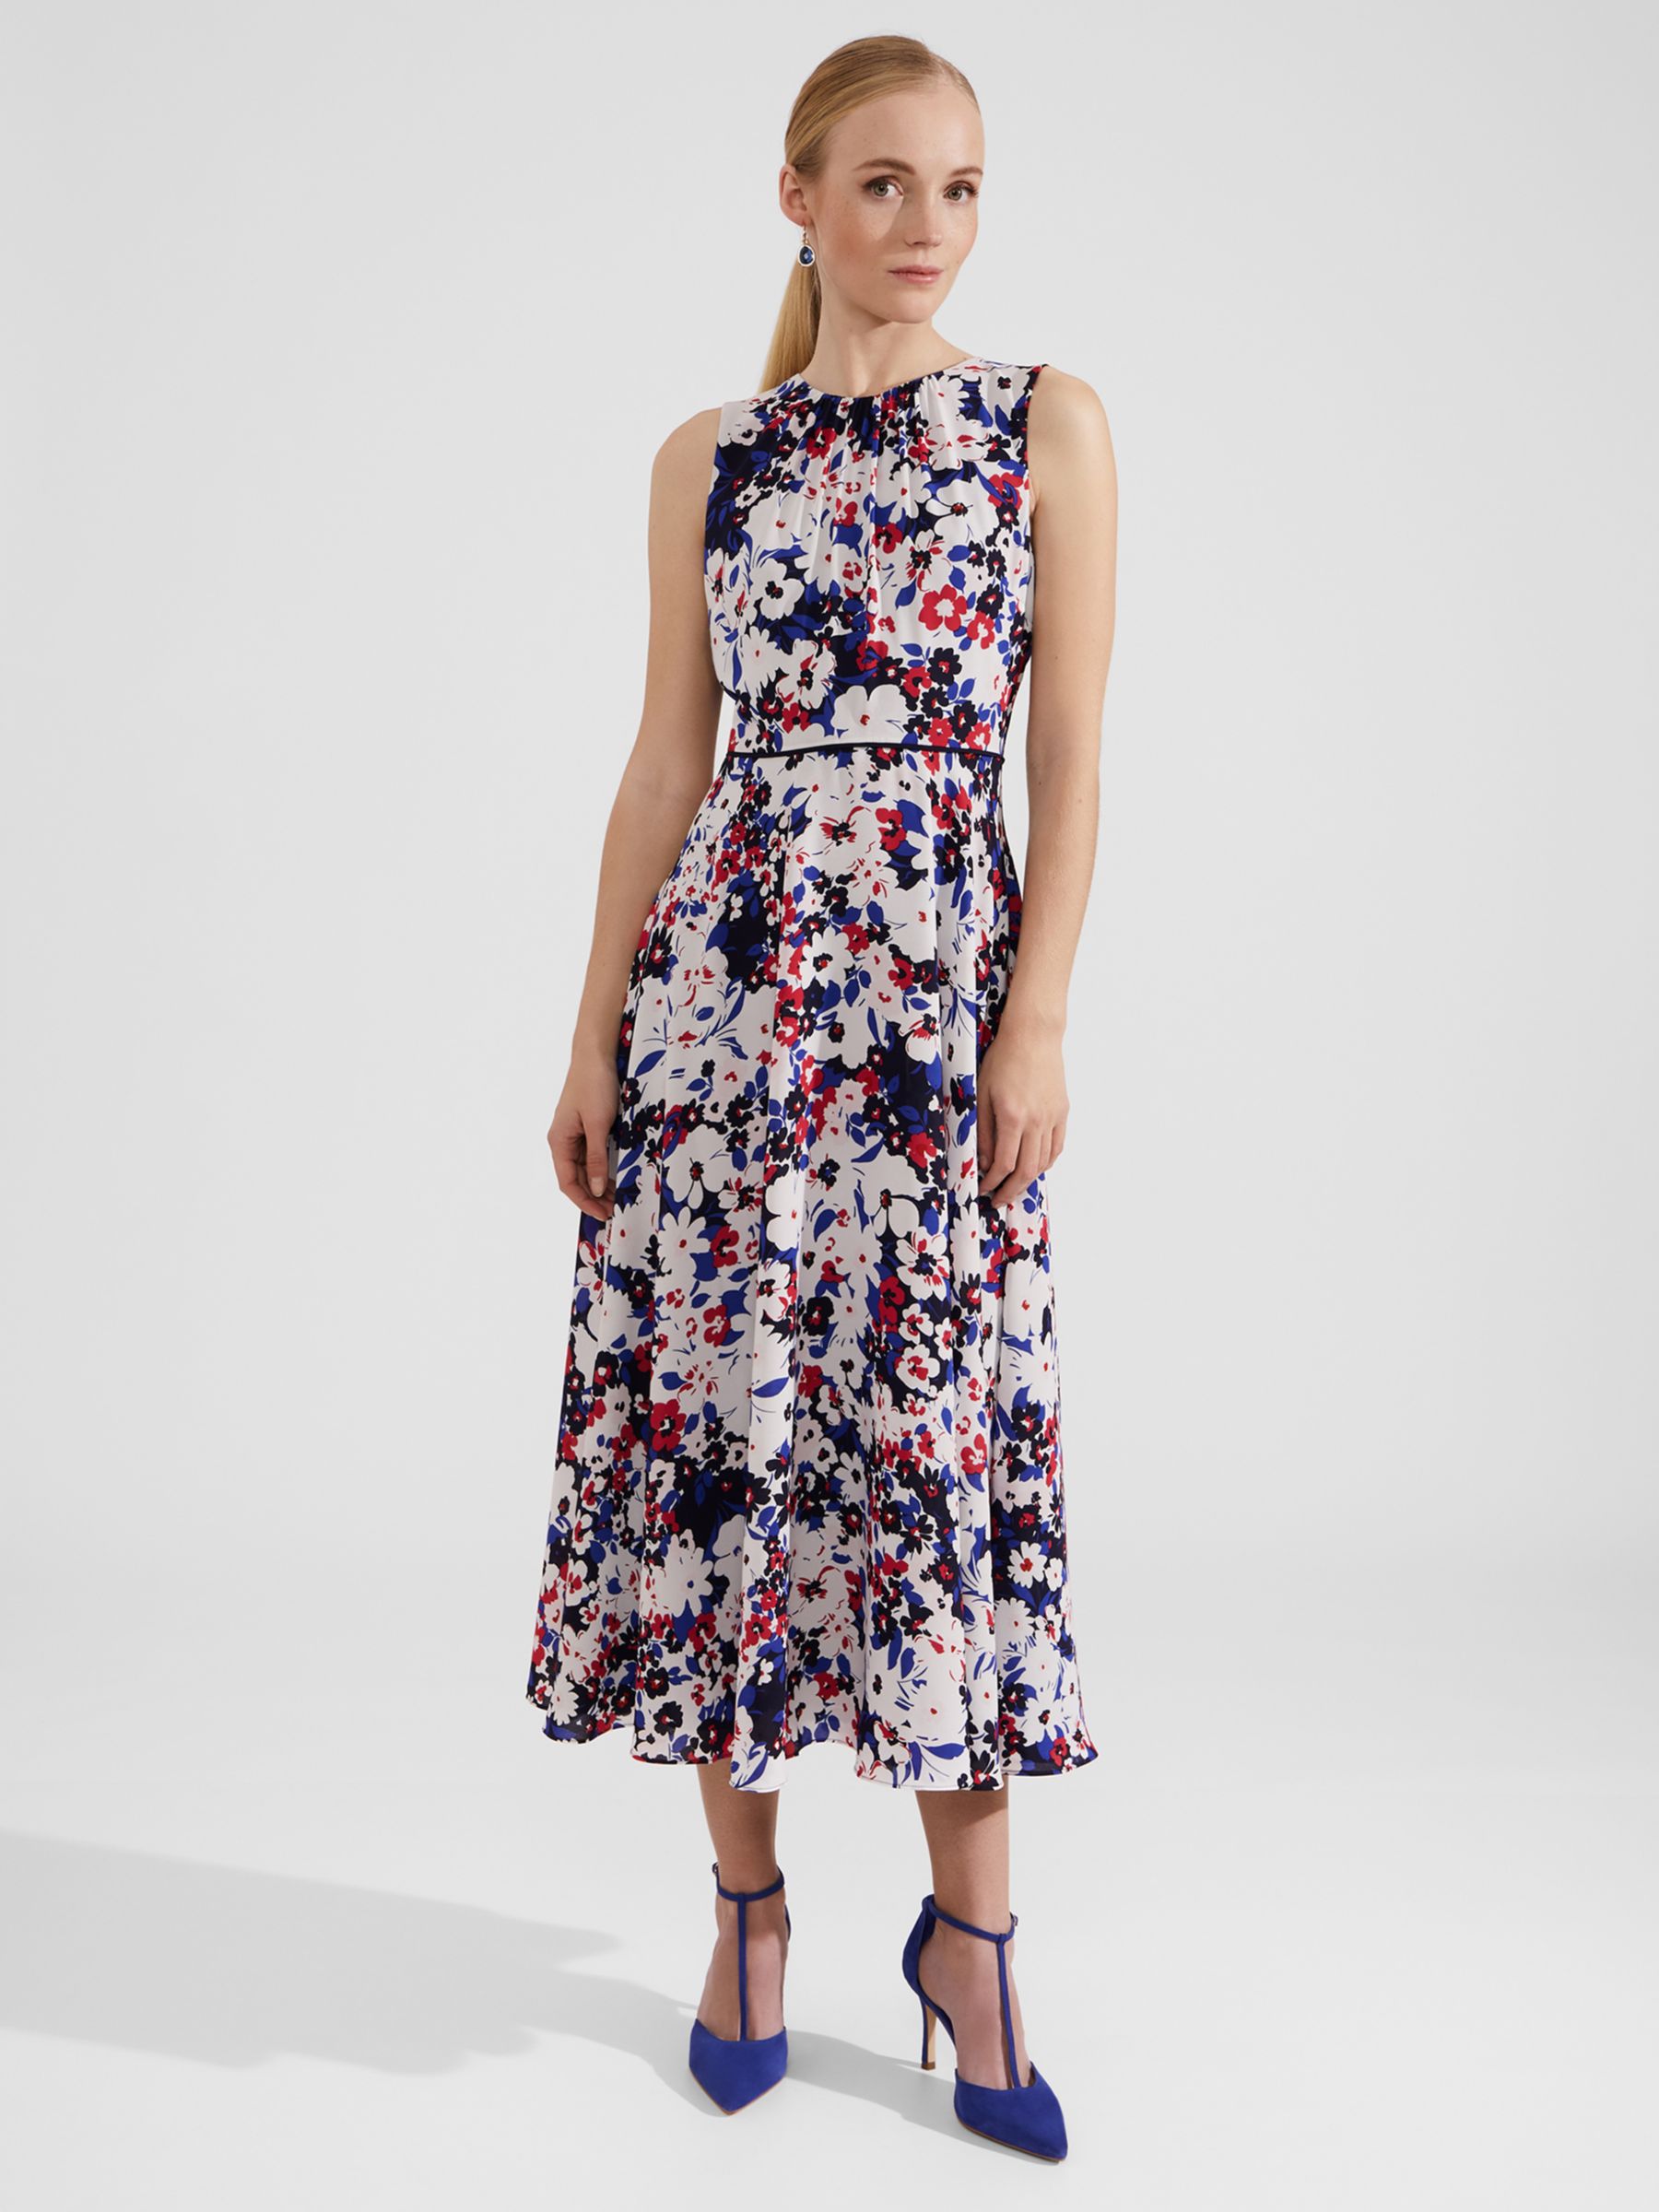 Hobbs Carly Floral Print Midi Dress, Navy/Multi, 20